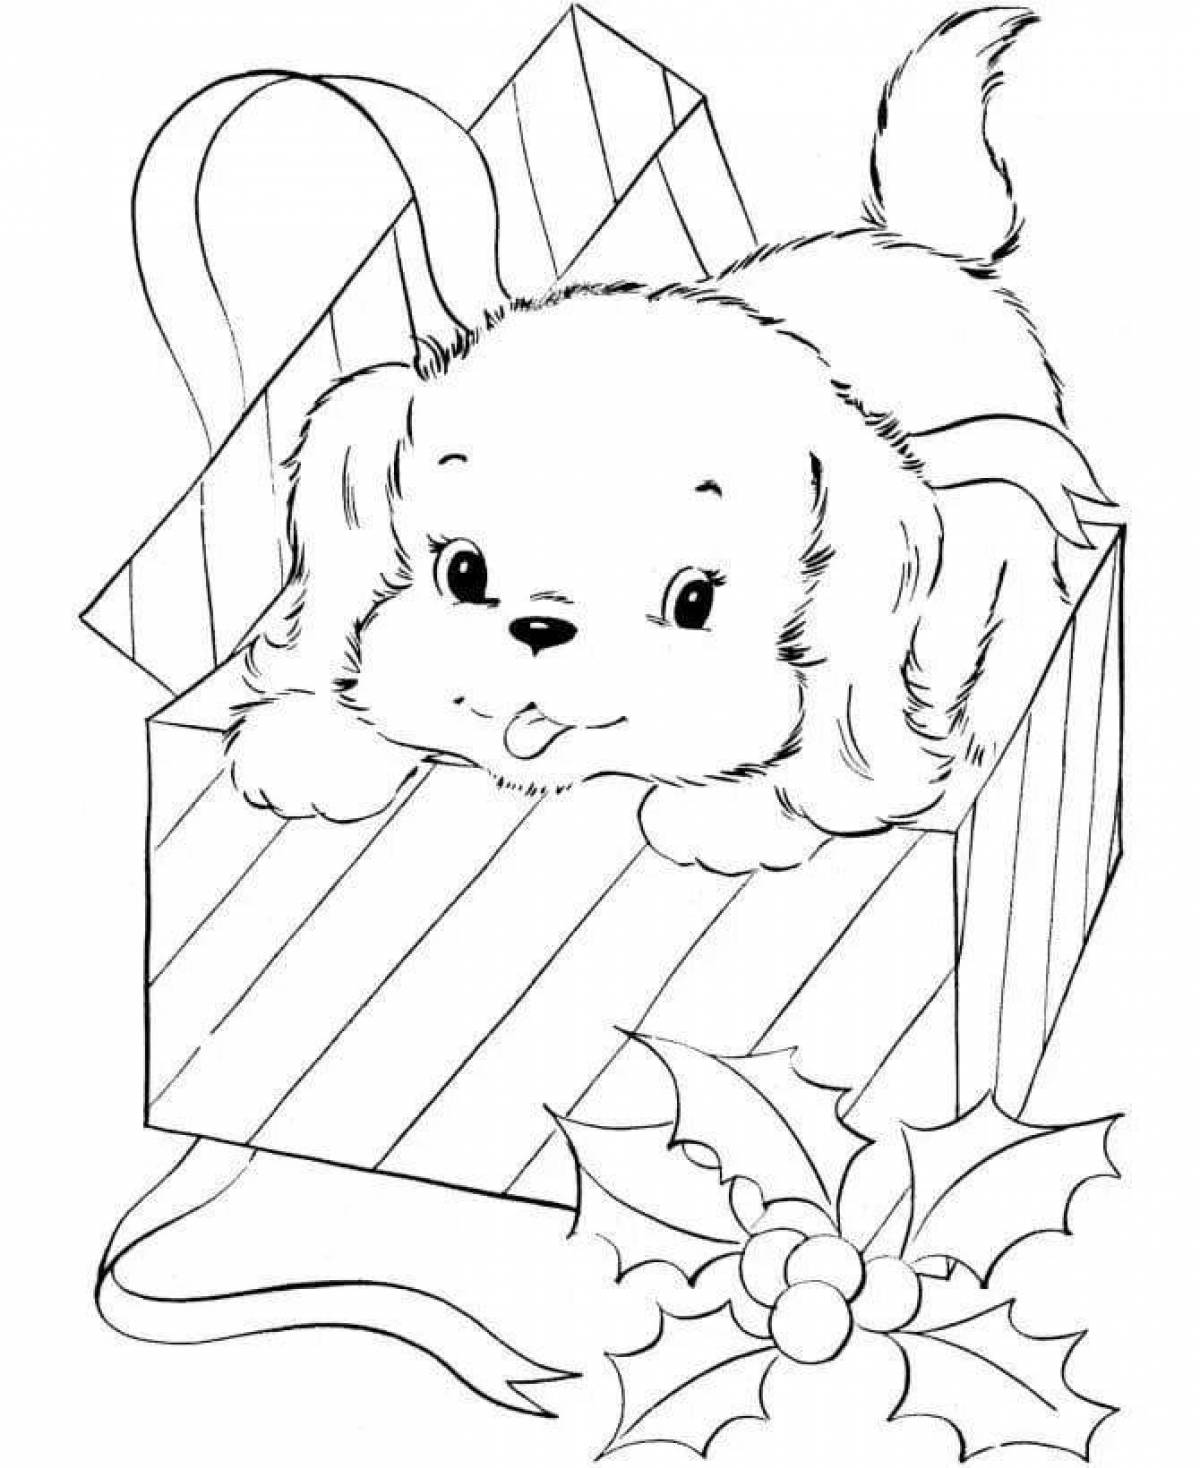 Cute Christmas coloring dog